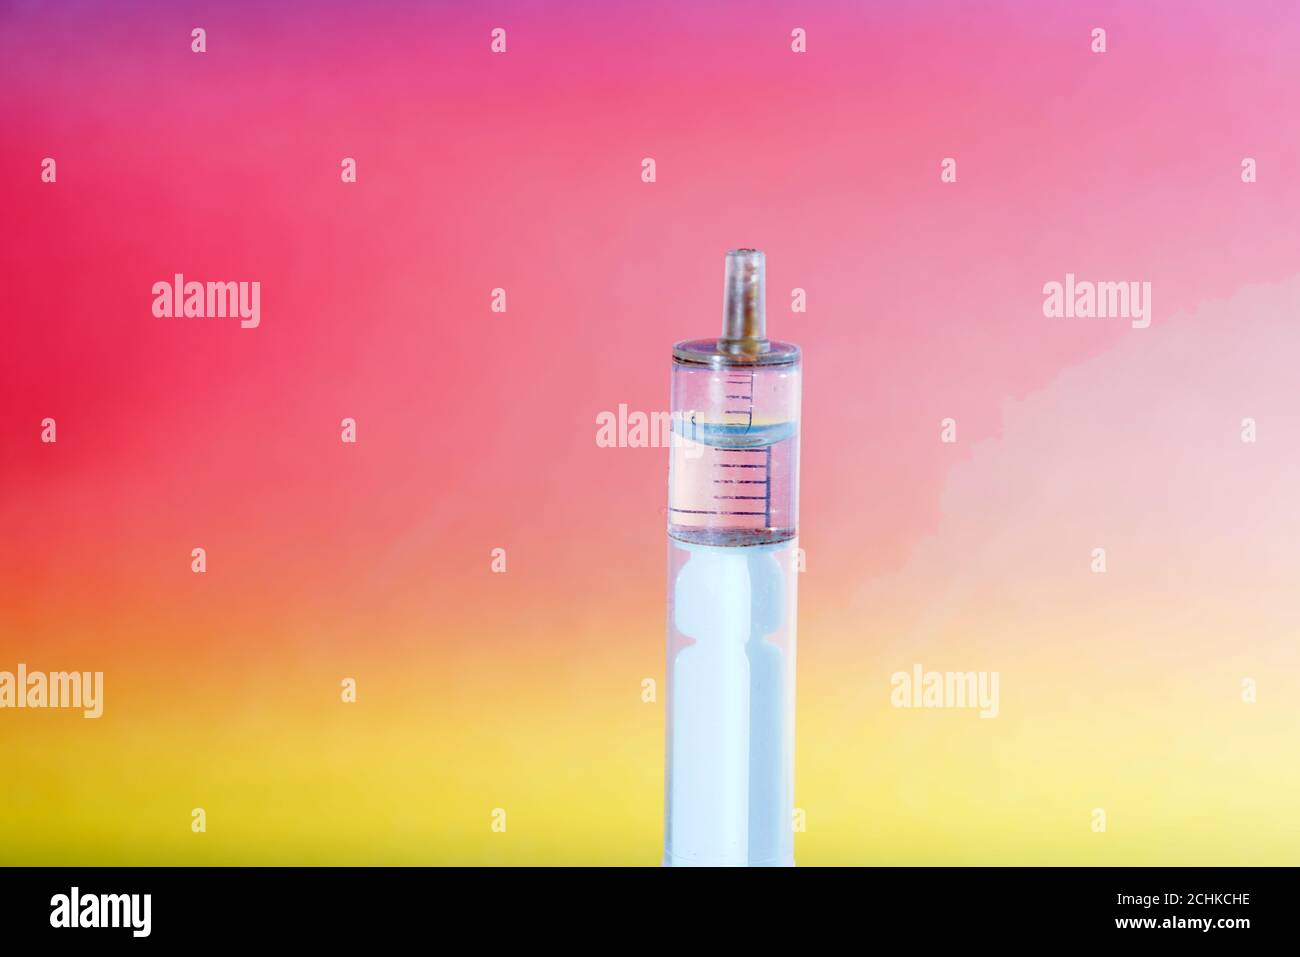 Closeup shot of a syringe without a needle Stock Photo